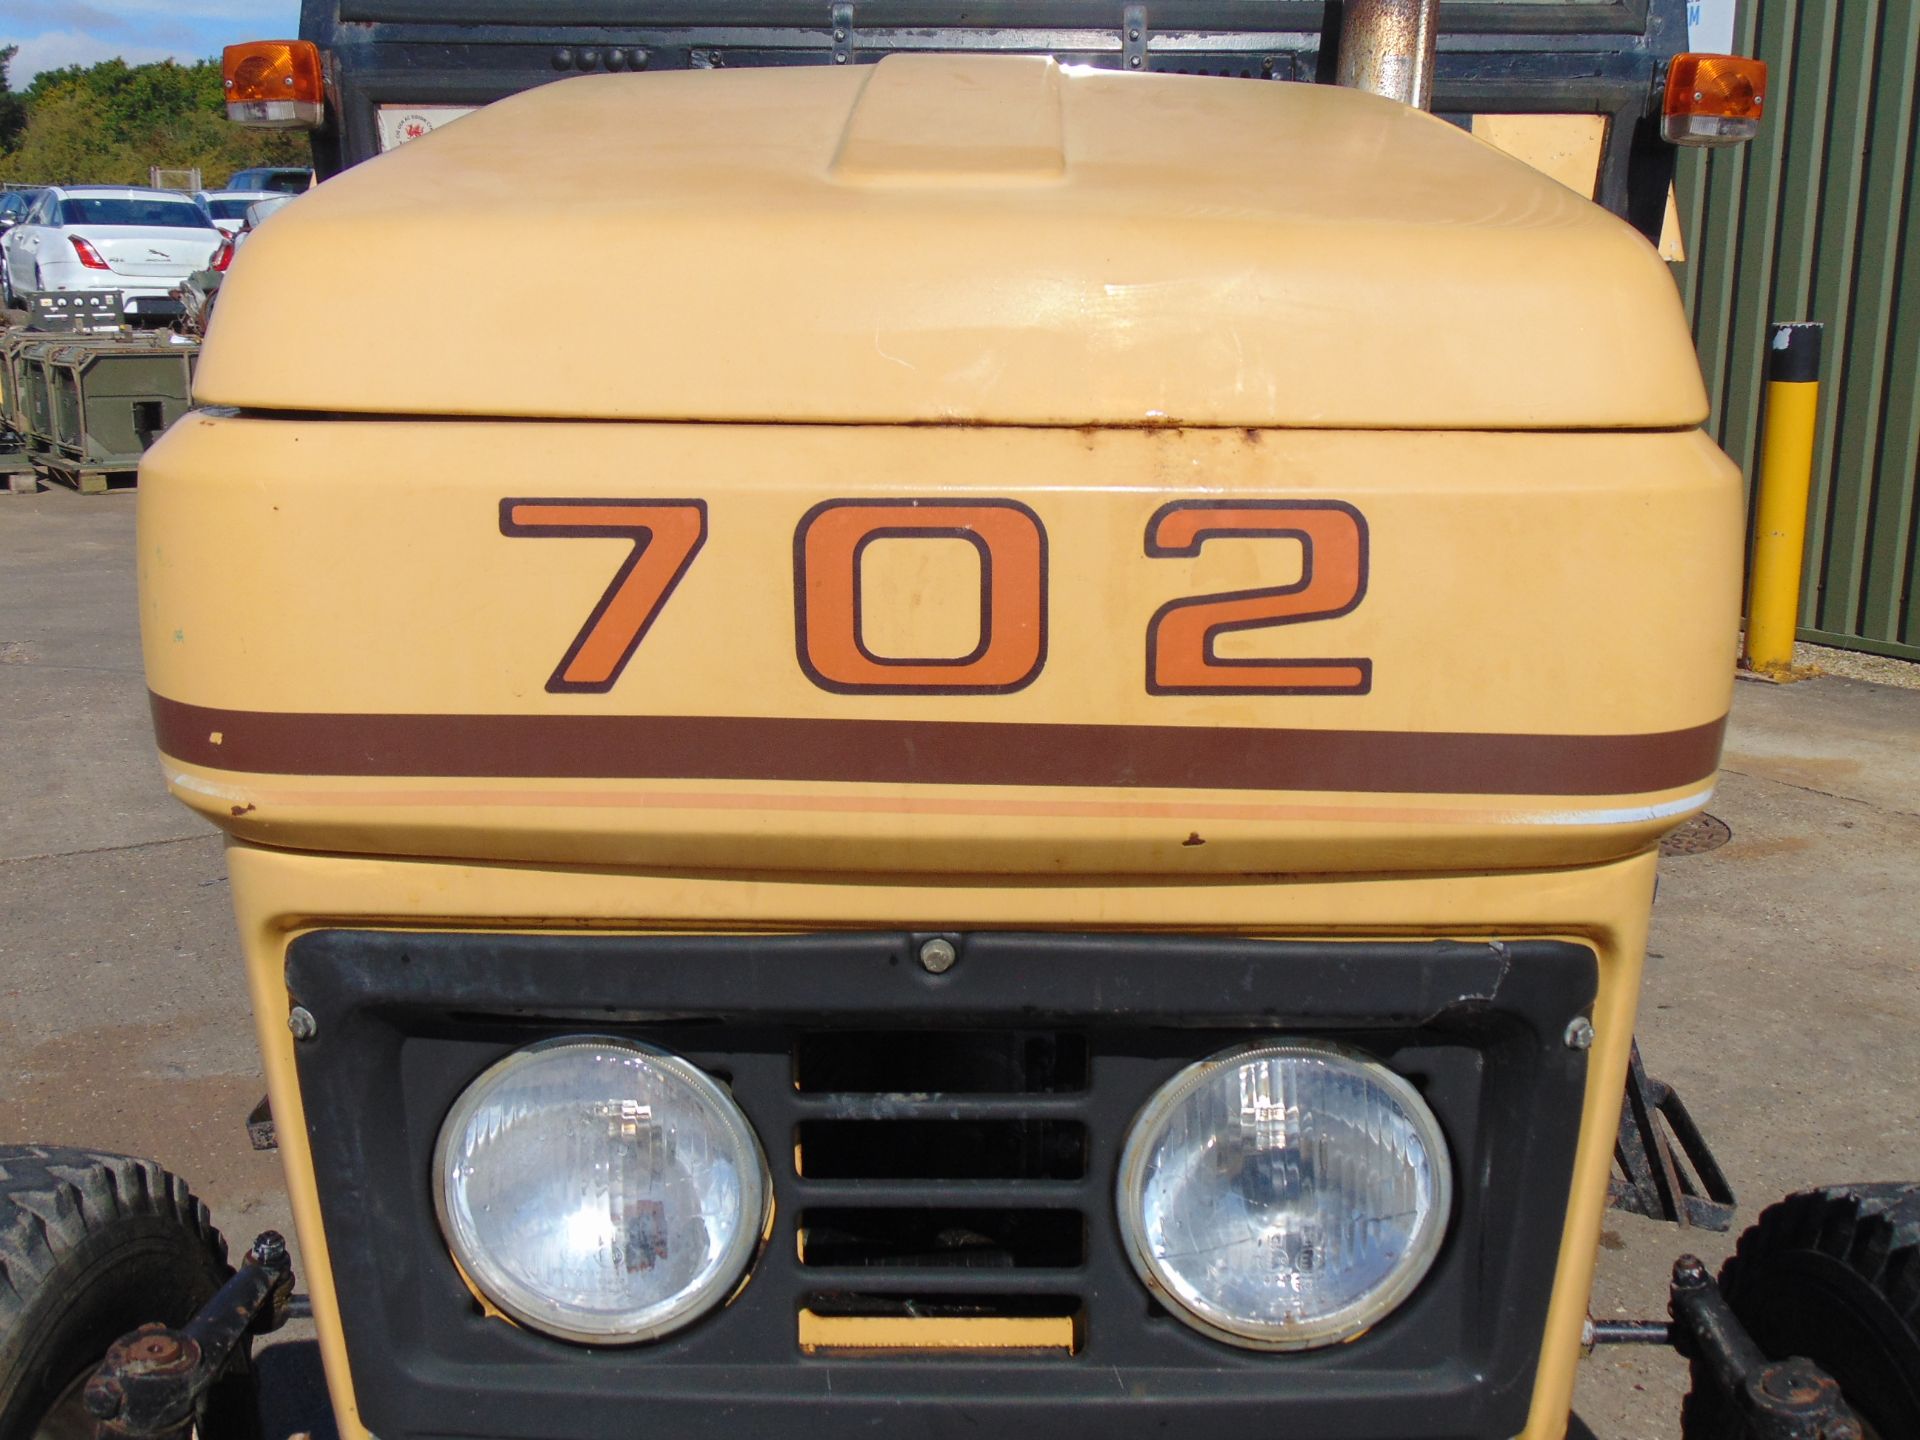 Leyland 702 Synchro 2WD Tractor - Image 12 of 21